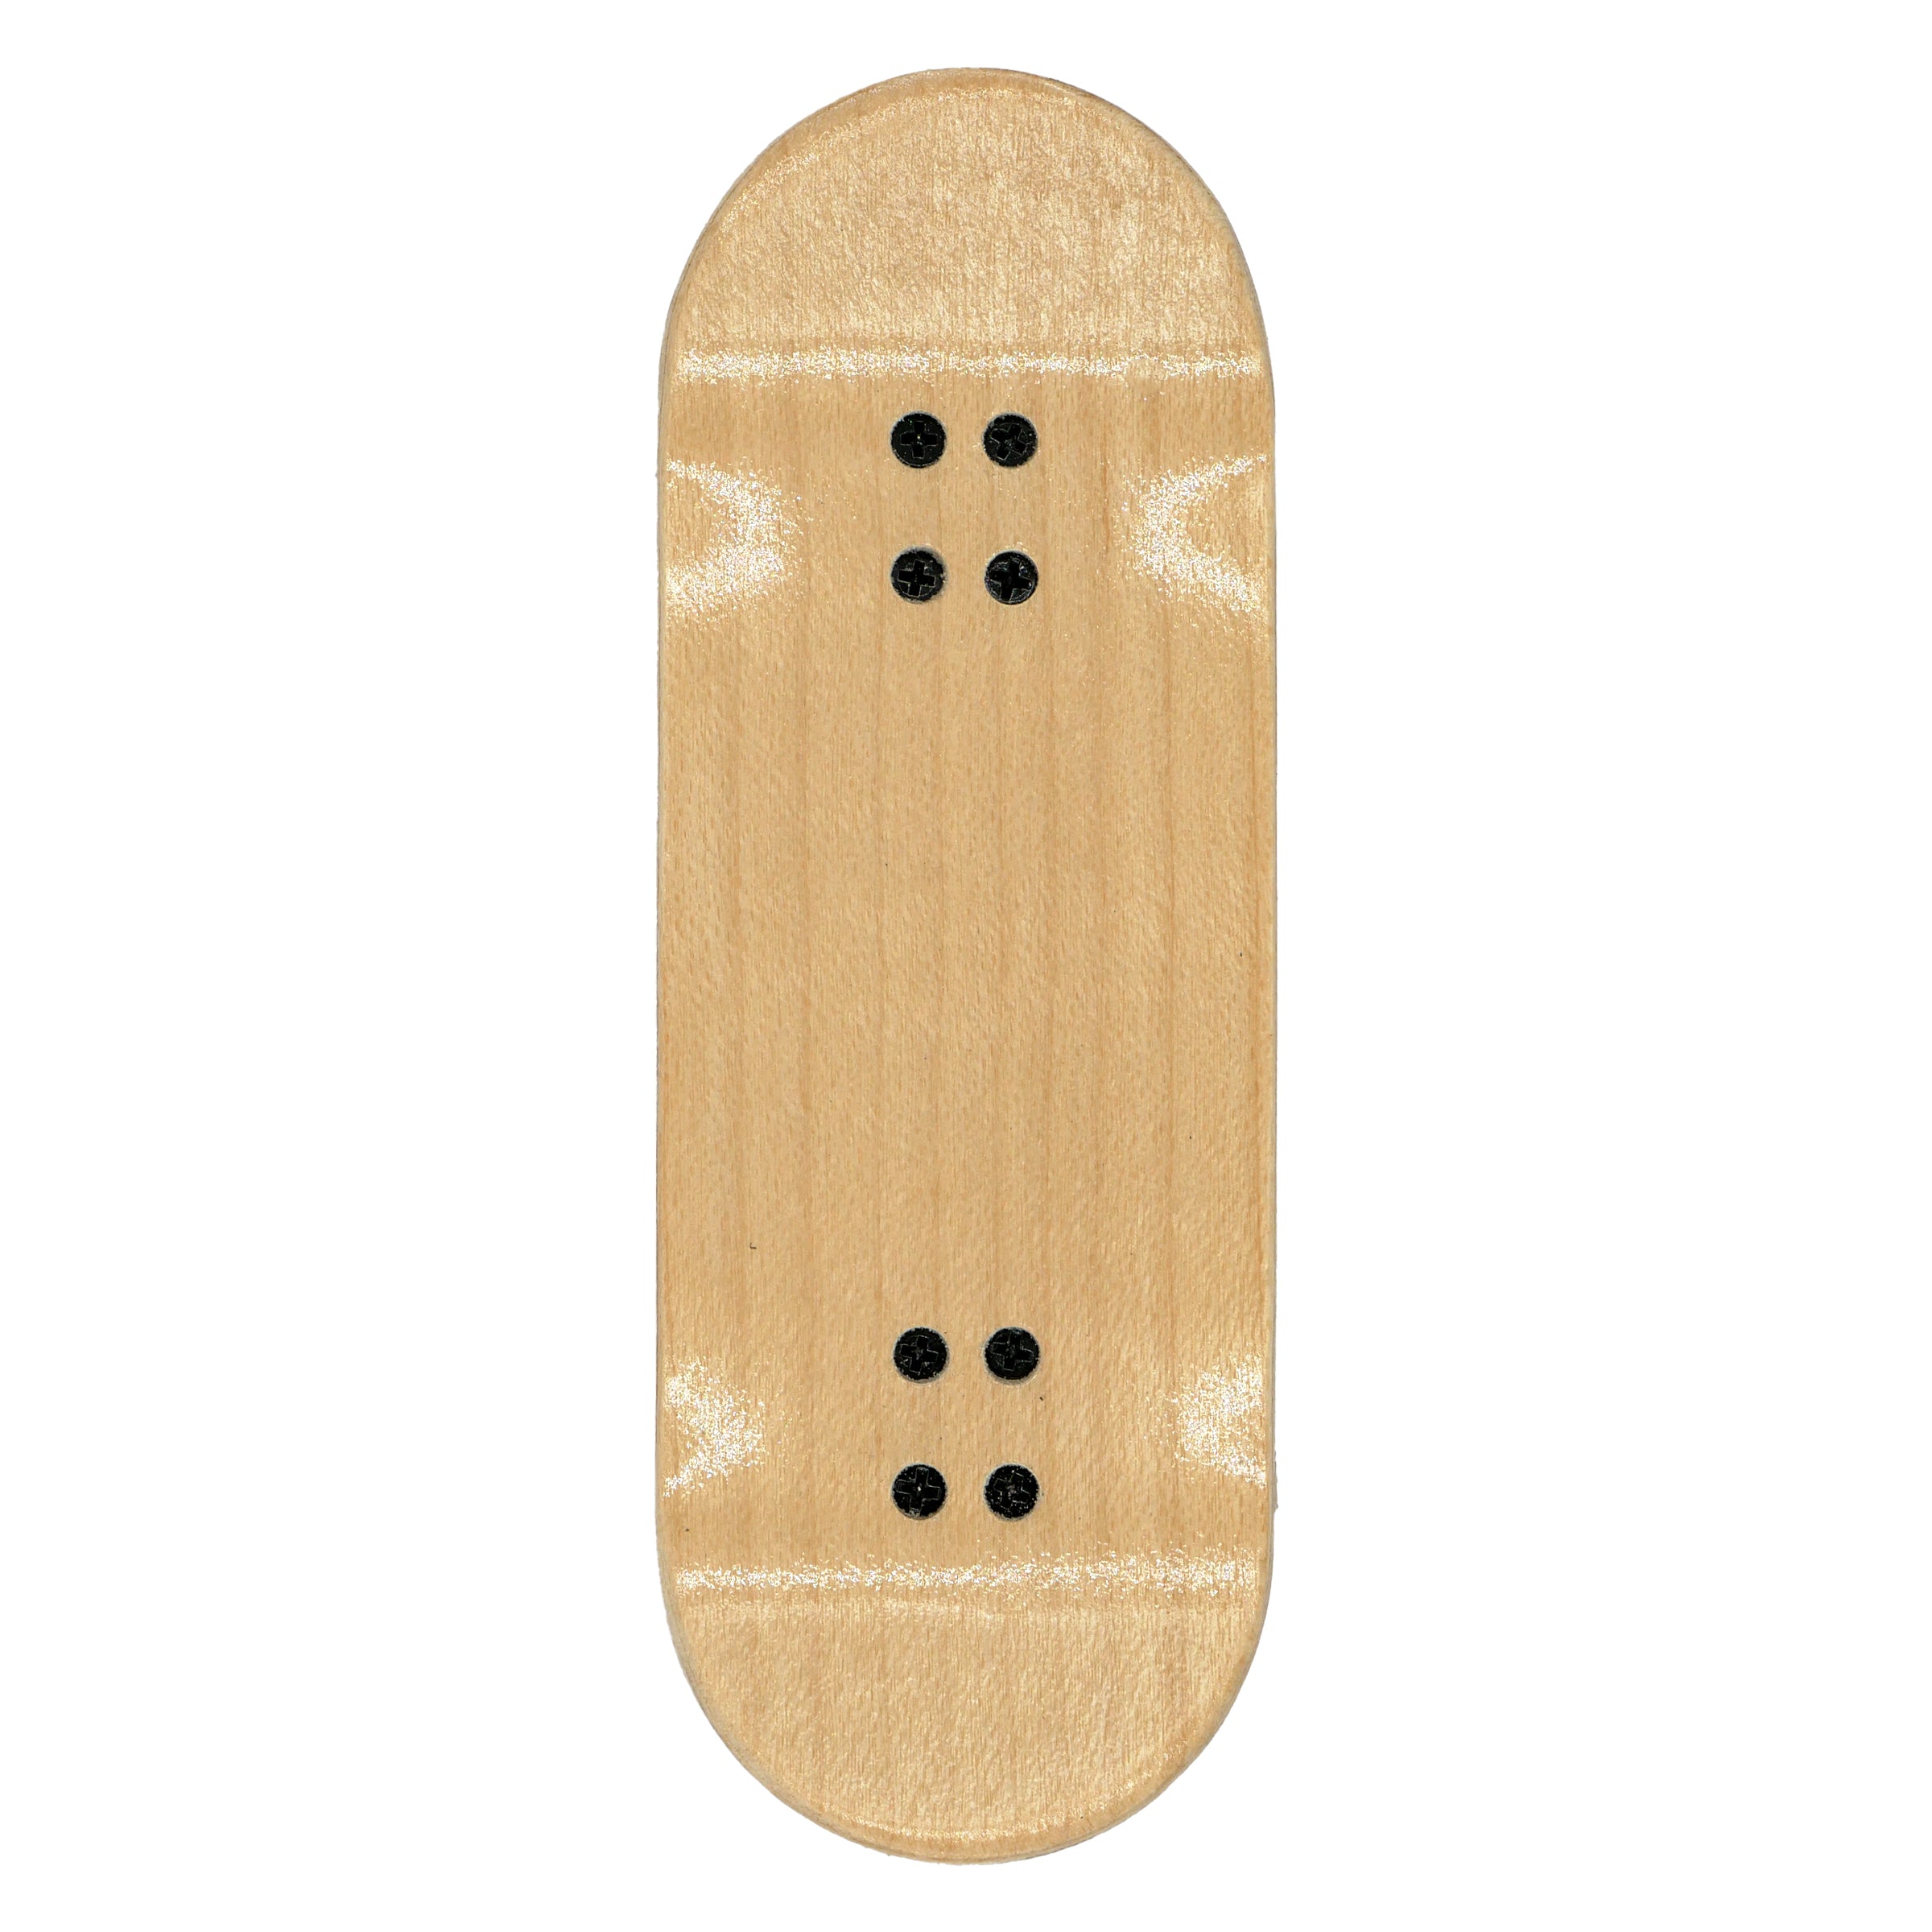 Slushcult Grom Series 007 Fingerboard Complete - Smack MINI Skate Shop Slushcult    Slushcult